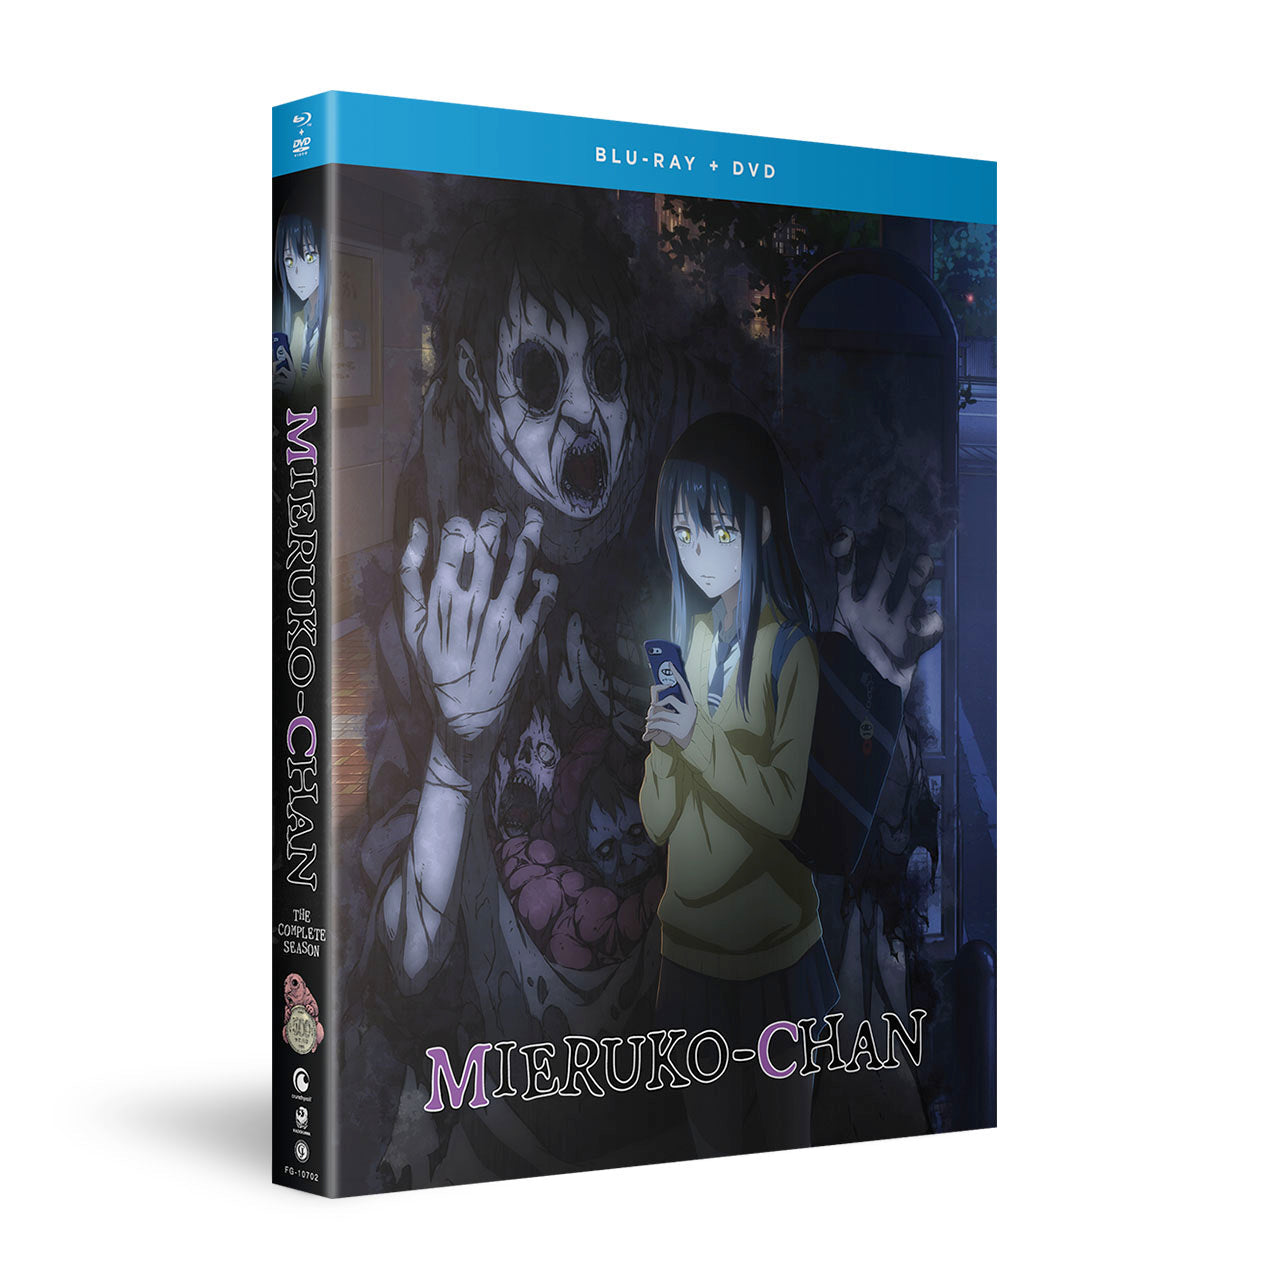 Mieruko-chan - The Complete Season - BD/DVD - LE image count 2